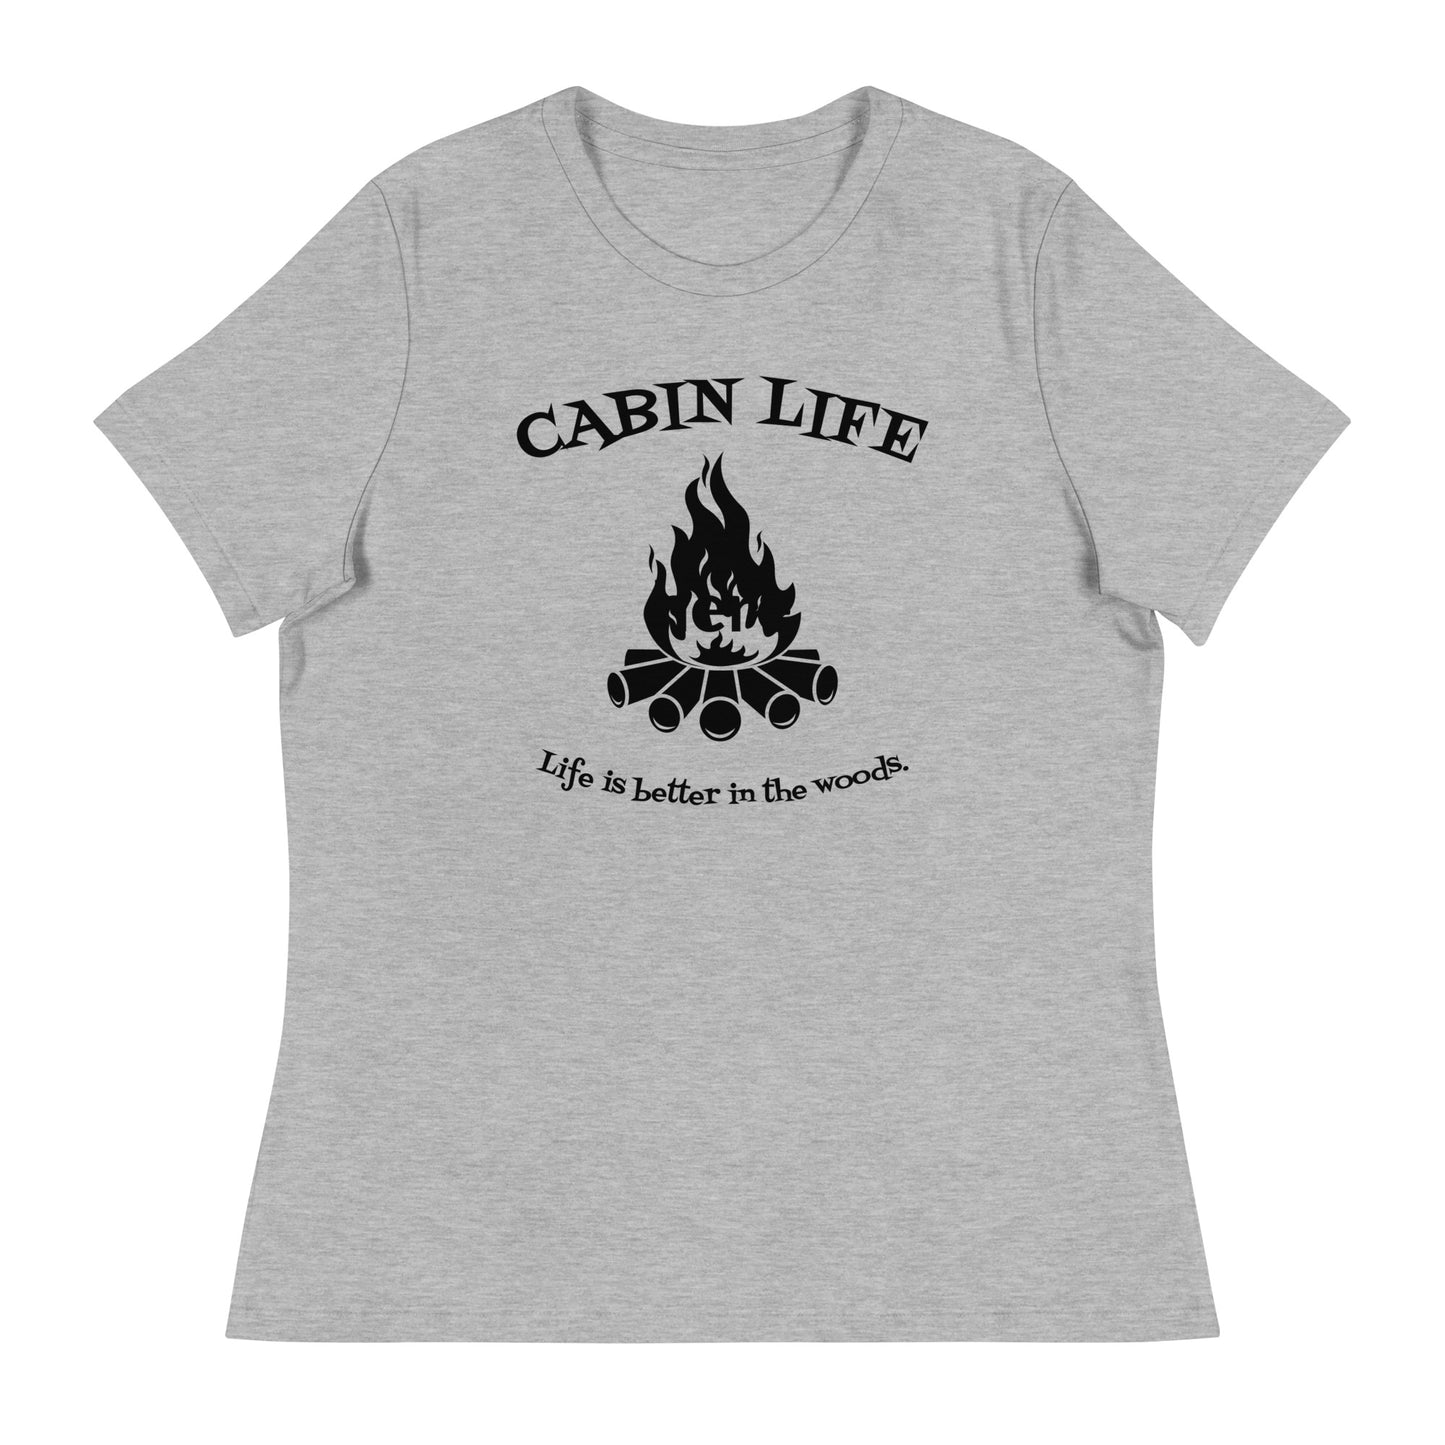 Cabin Life - Life is Better in the Woods - Women's tee